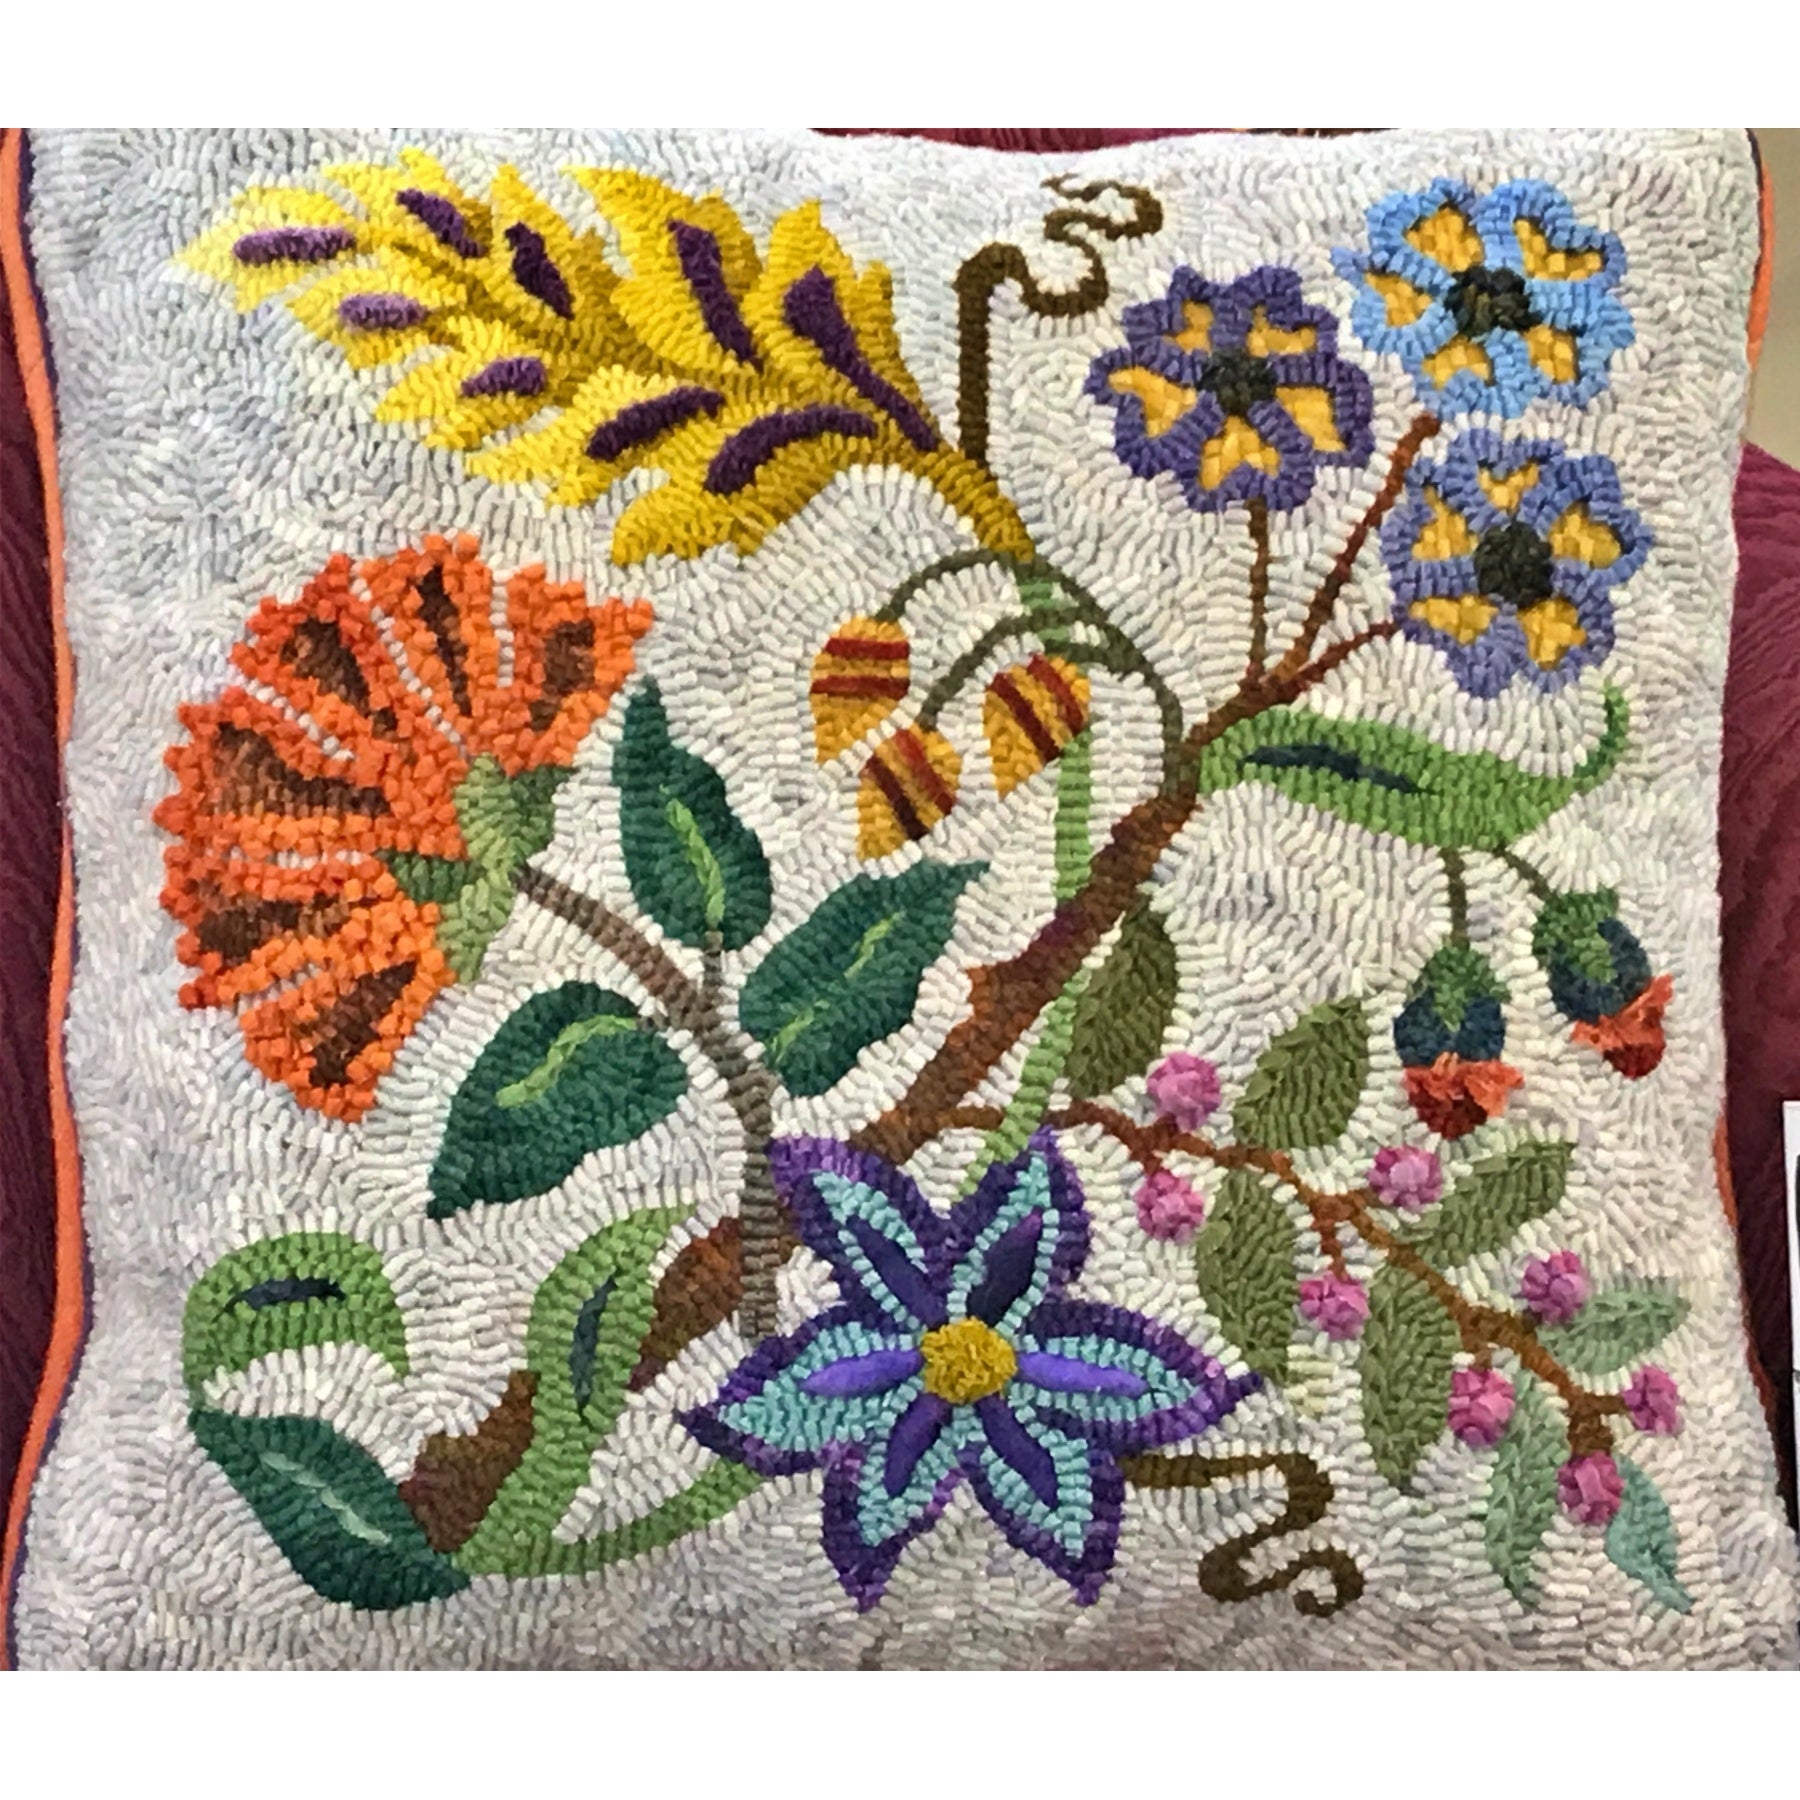 Gentry, rug hooked by Suzi Jones